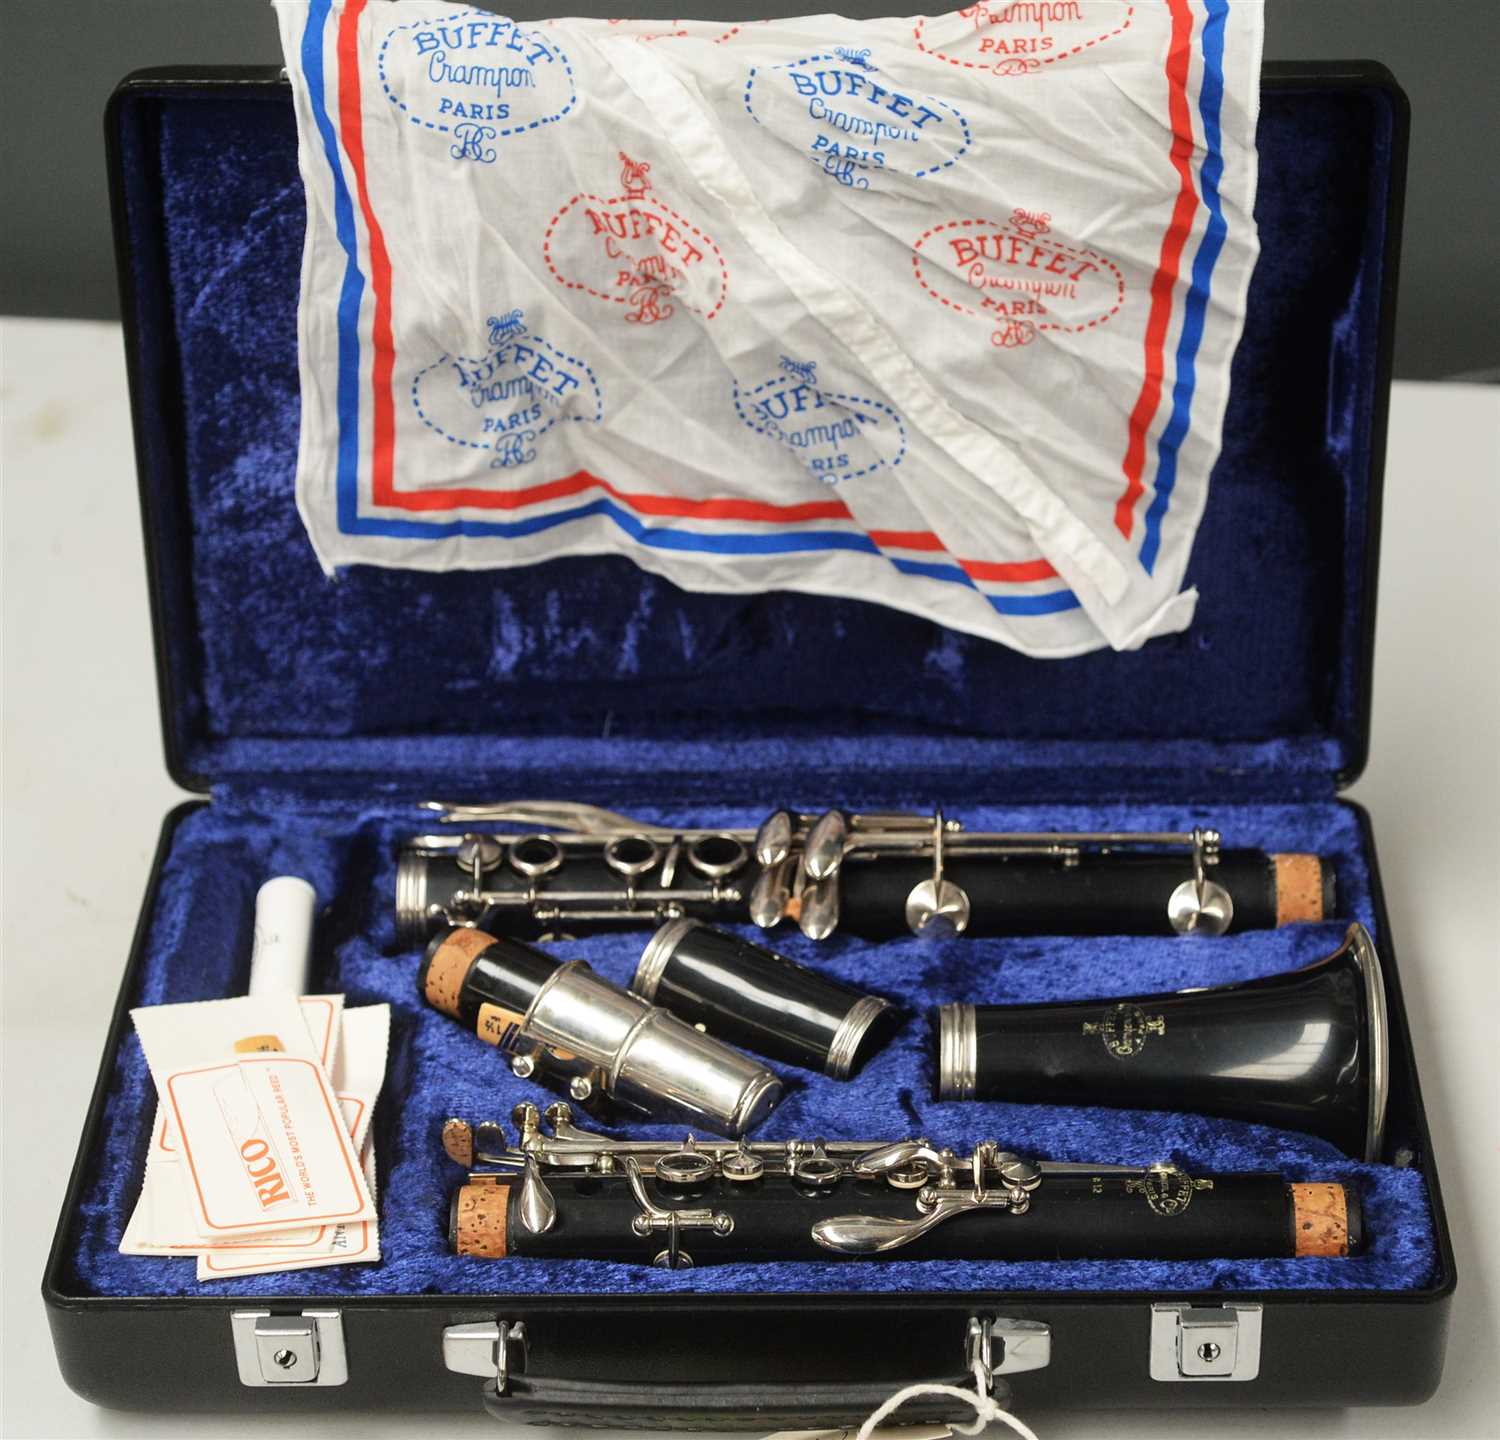 Lot 28 - A Buffet composition clarinet.